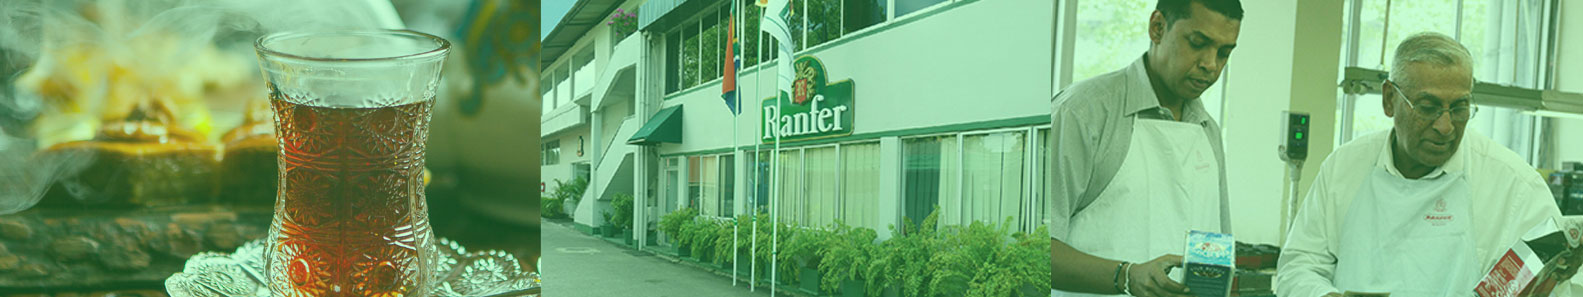 RANFER TEAS PVT LTD